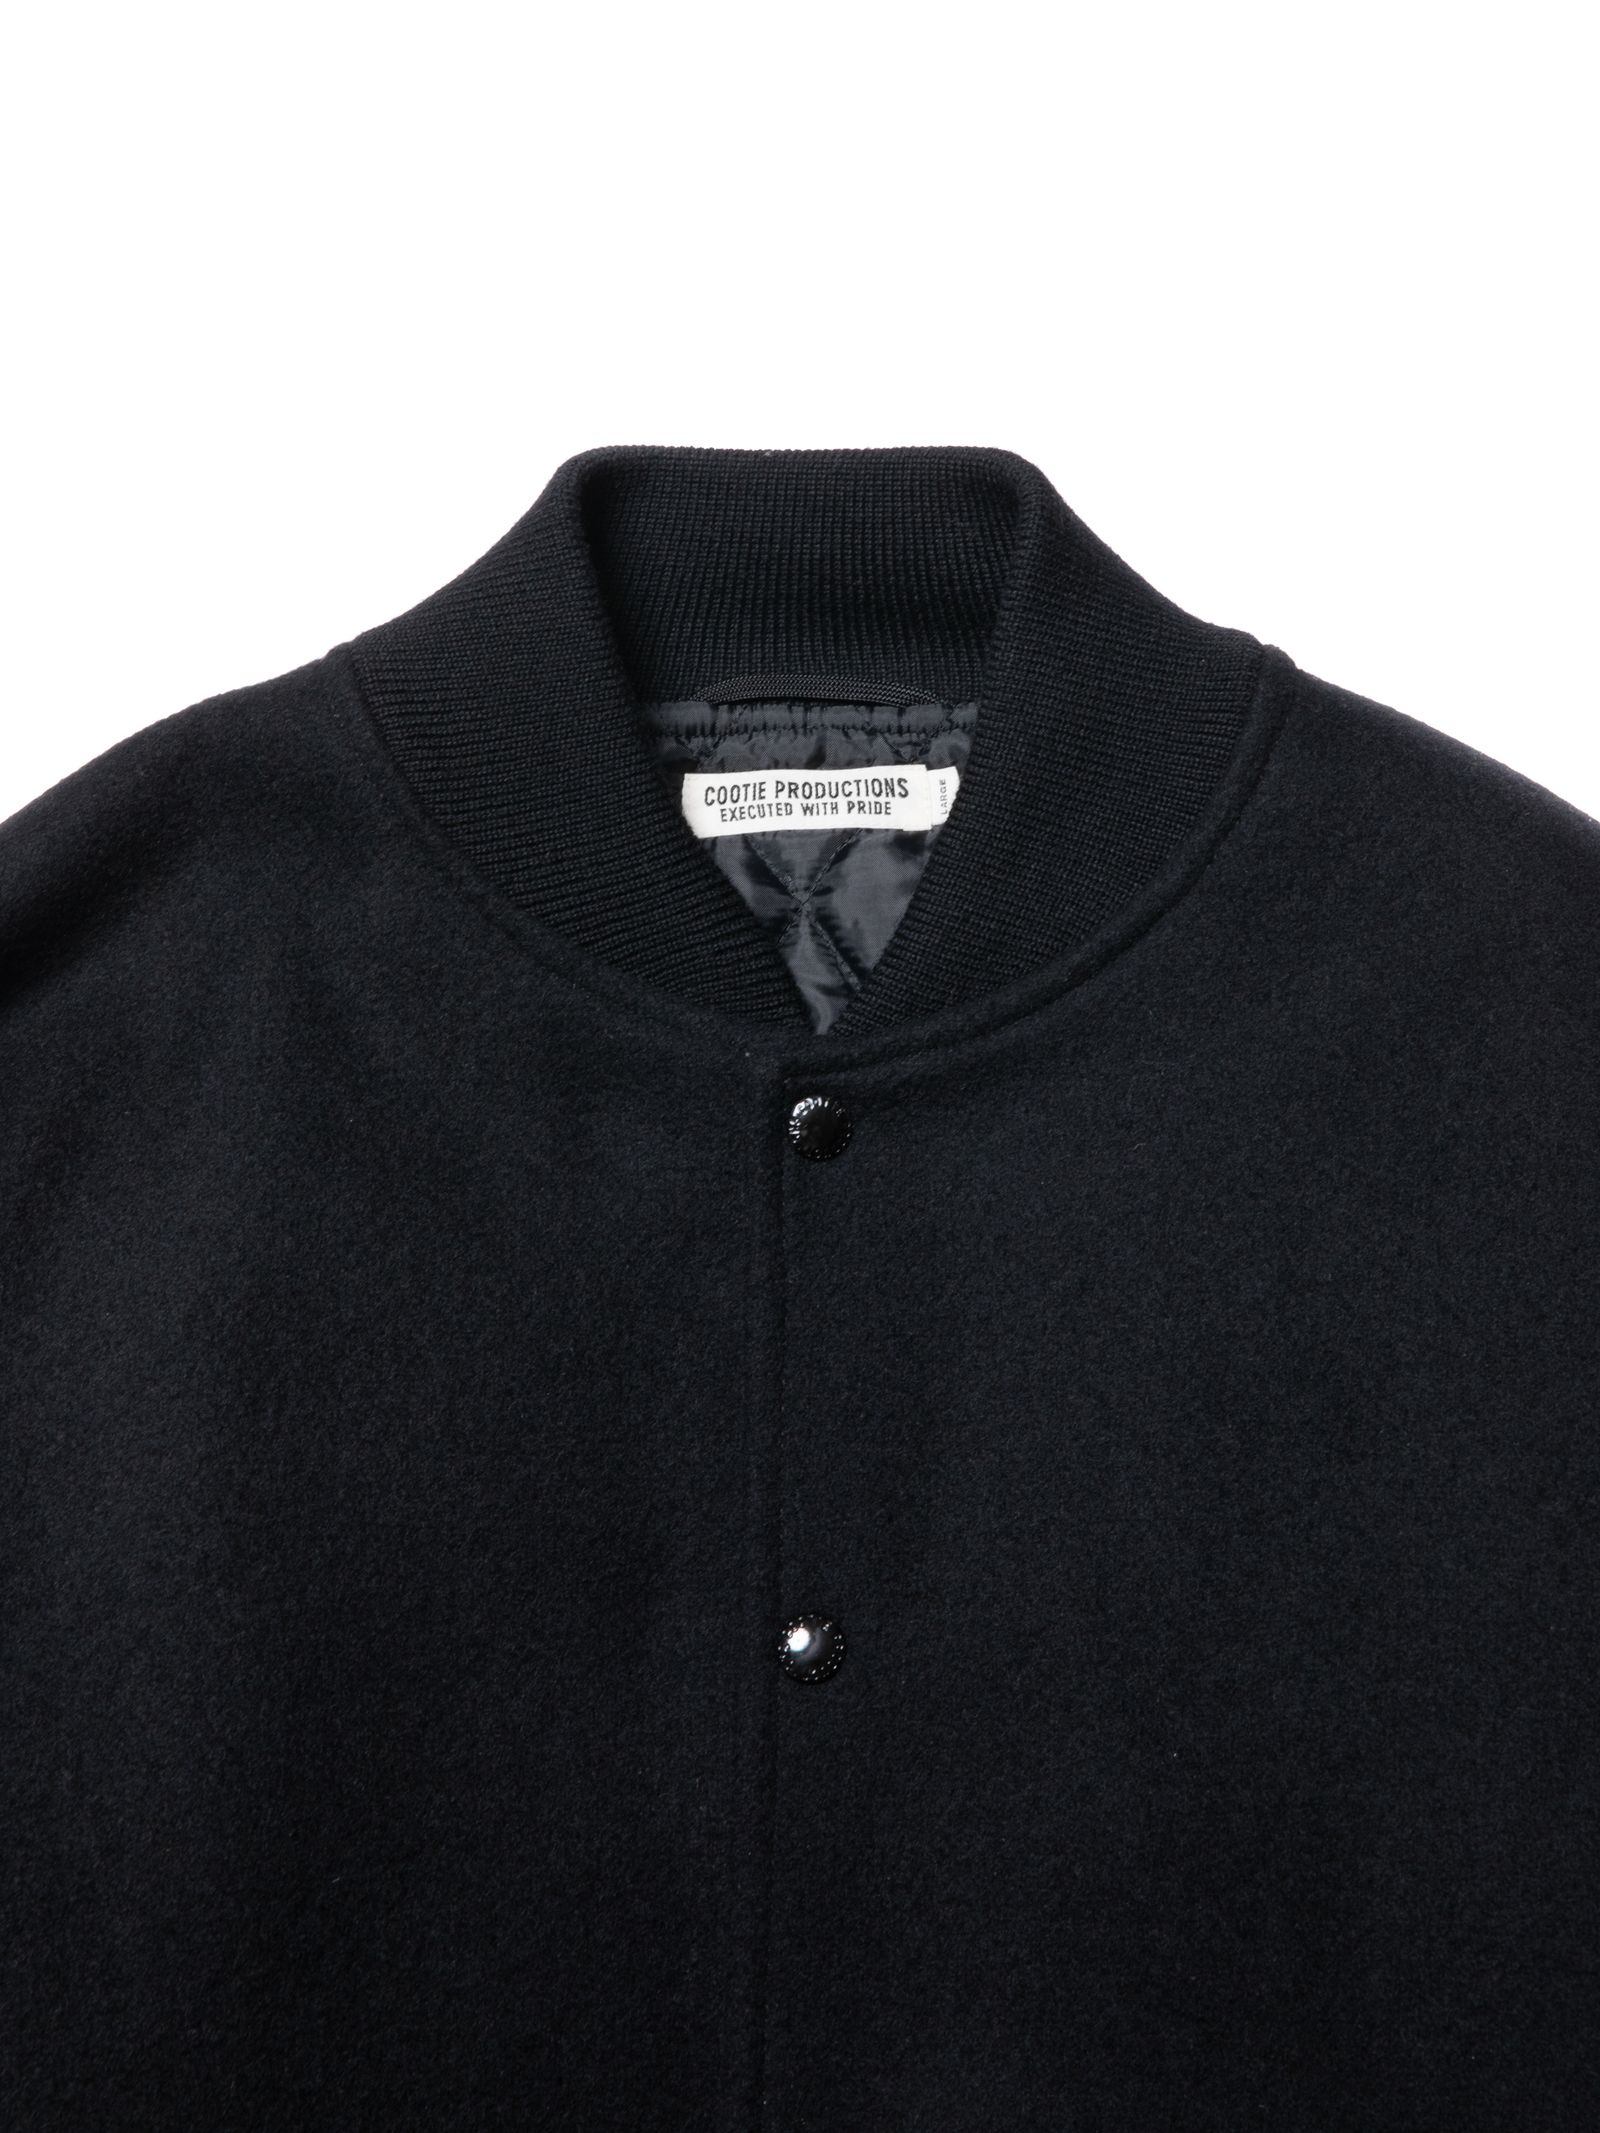 COOTIE PRODUCTIONS - Wool Melton Error Fit Stadium Jacket (BLACK 